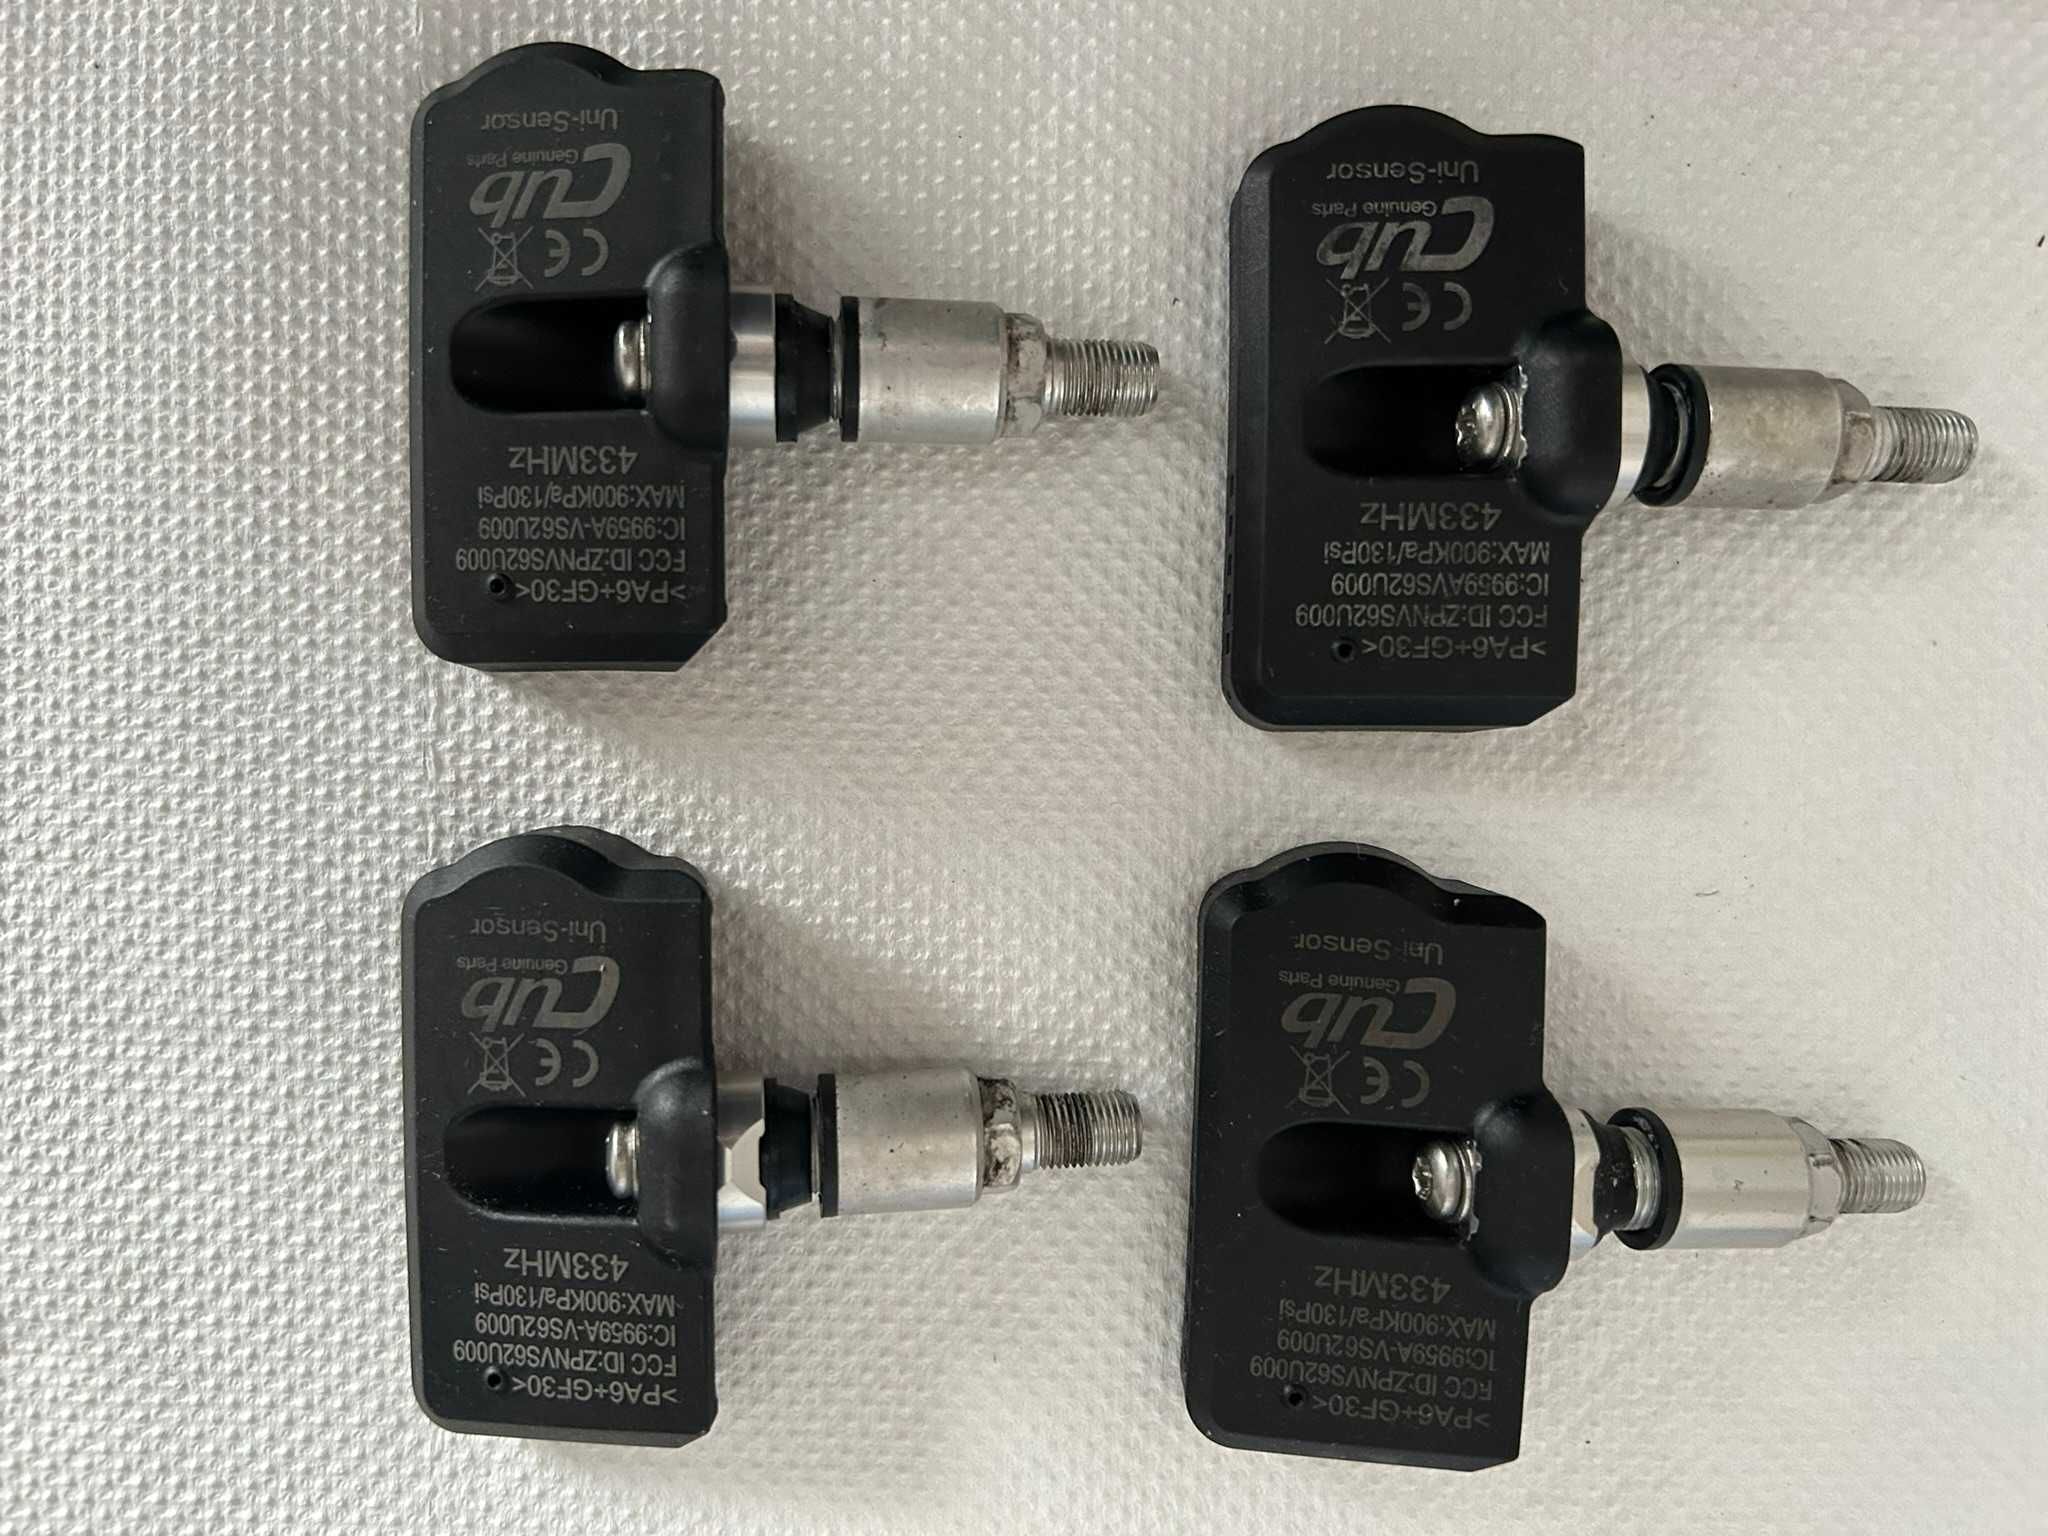 Senzori presiune pneuri - 9959A-VS62U009 - 433 MHz - multimarca